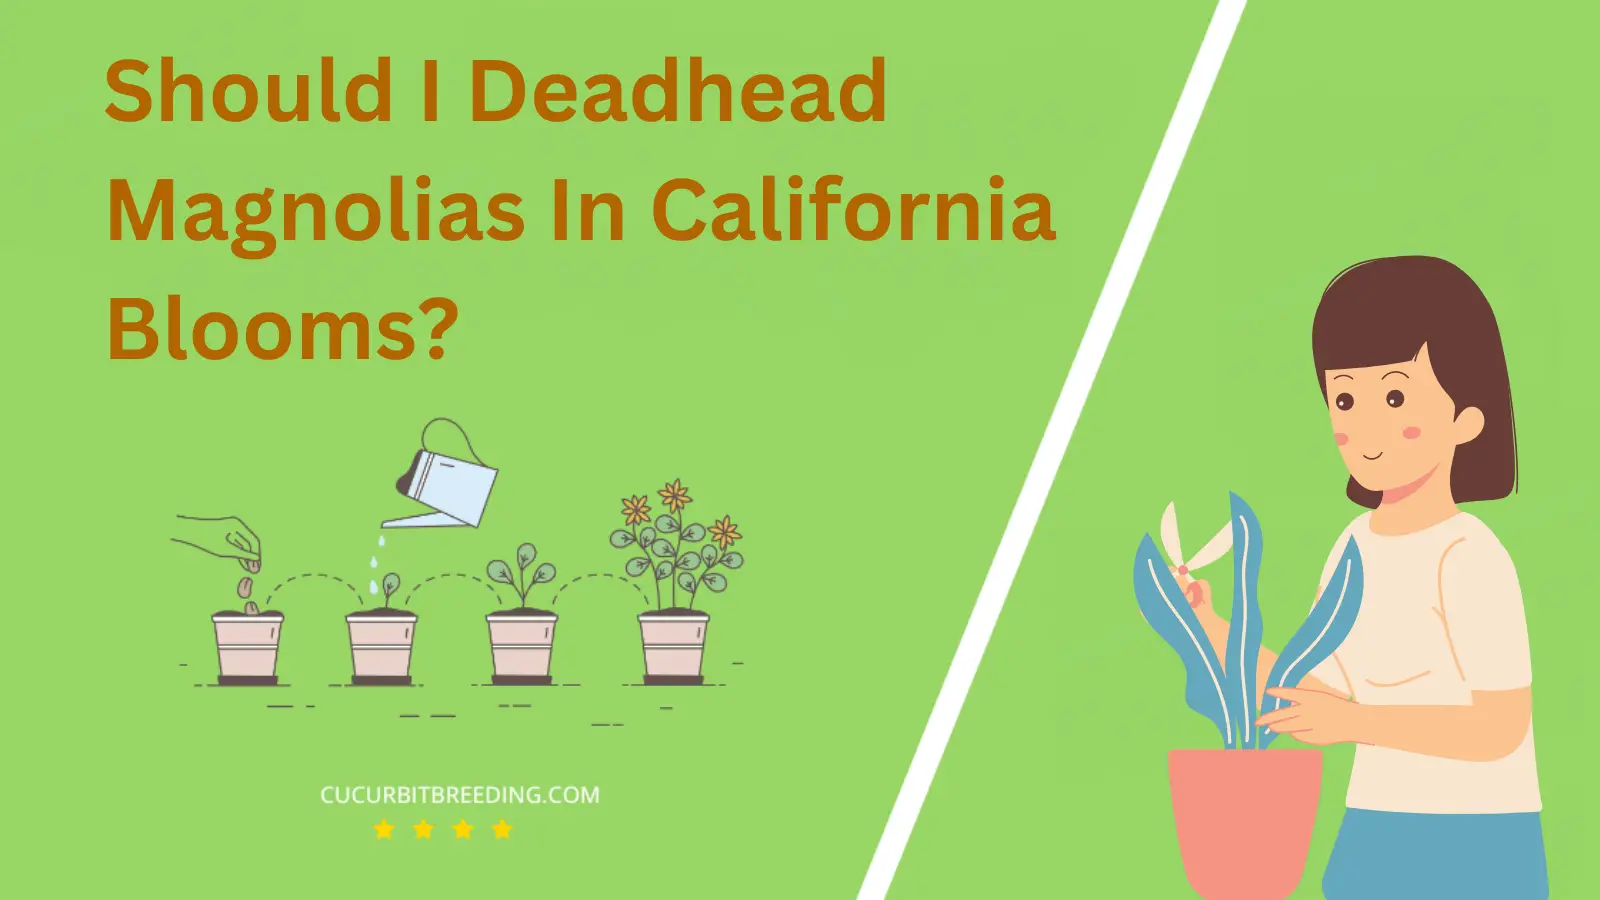 Should I Deadhead Magnolias In California Blooms?